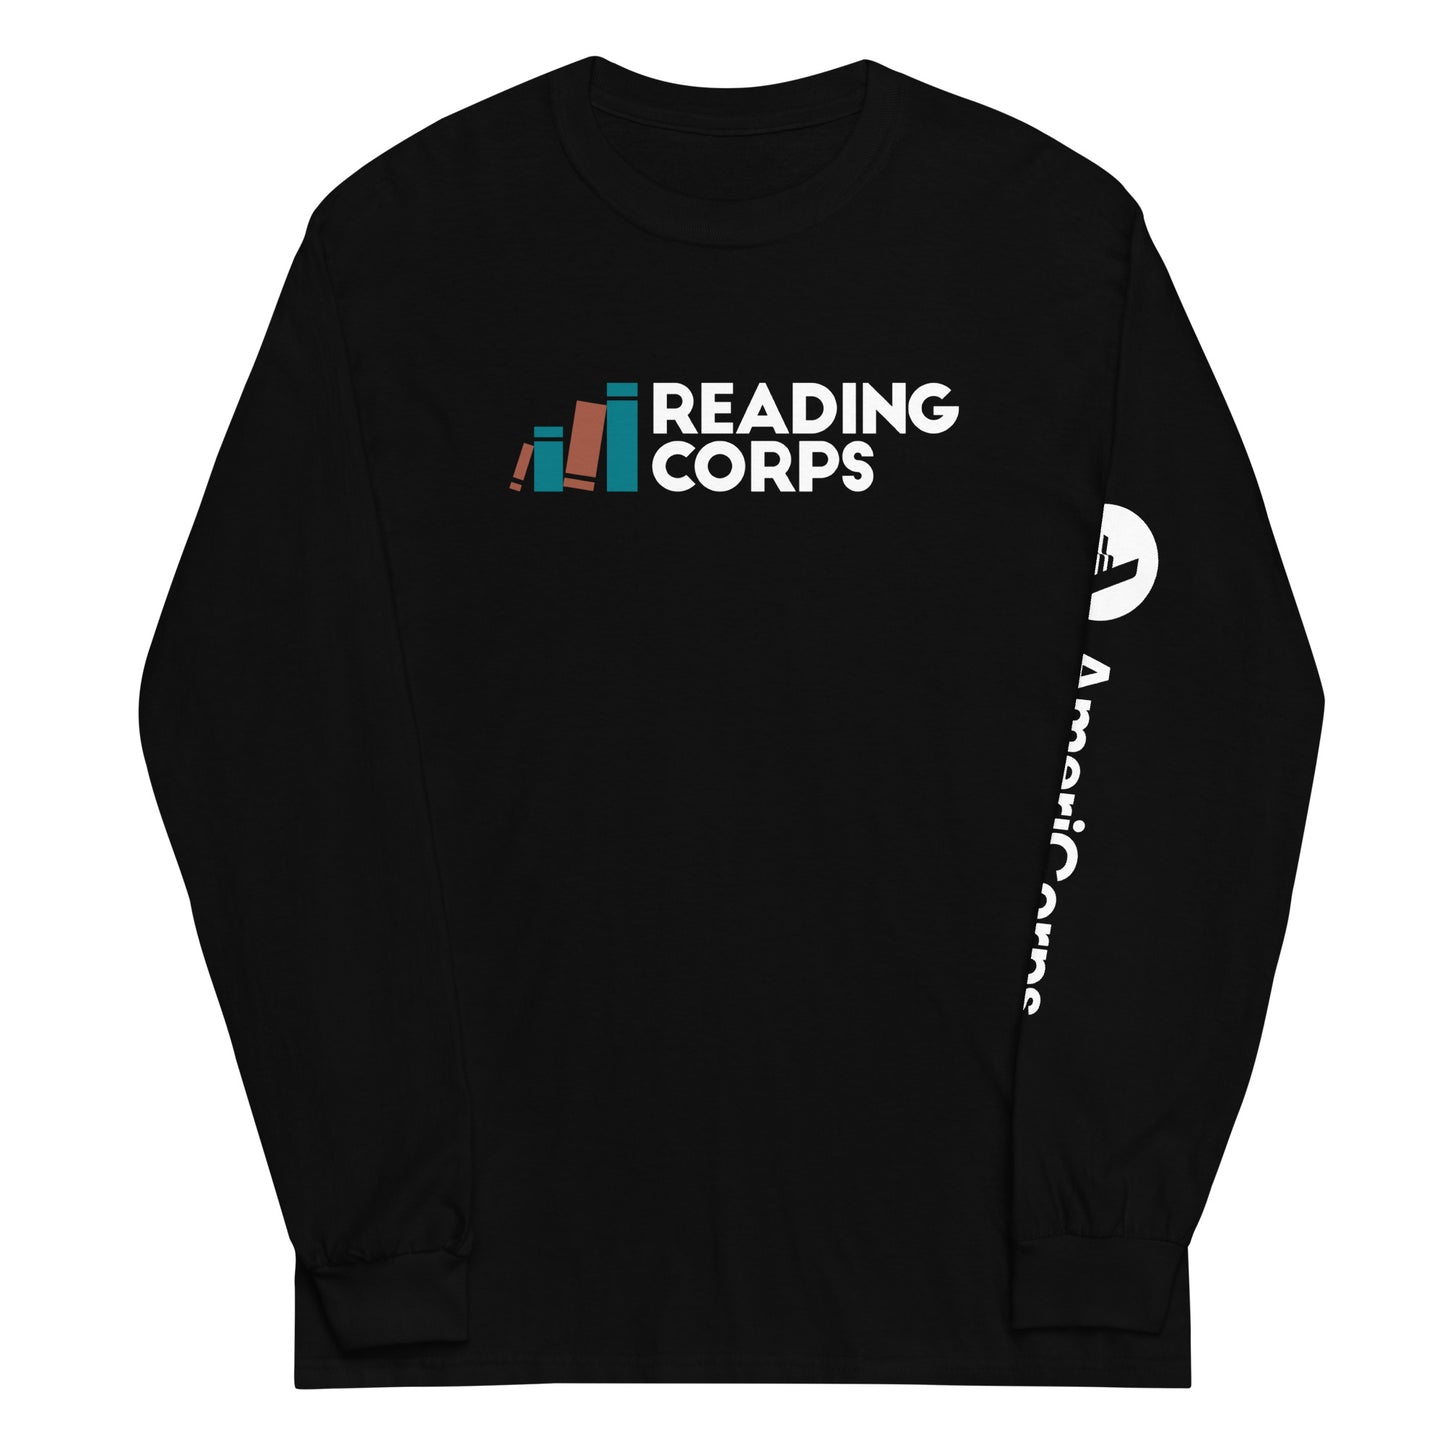 ReadingCorps Long Sleeve Tee